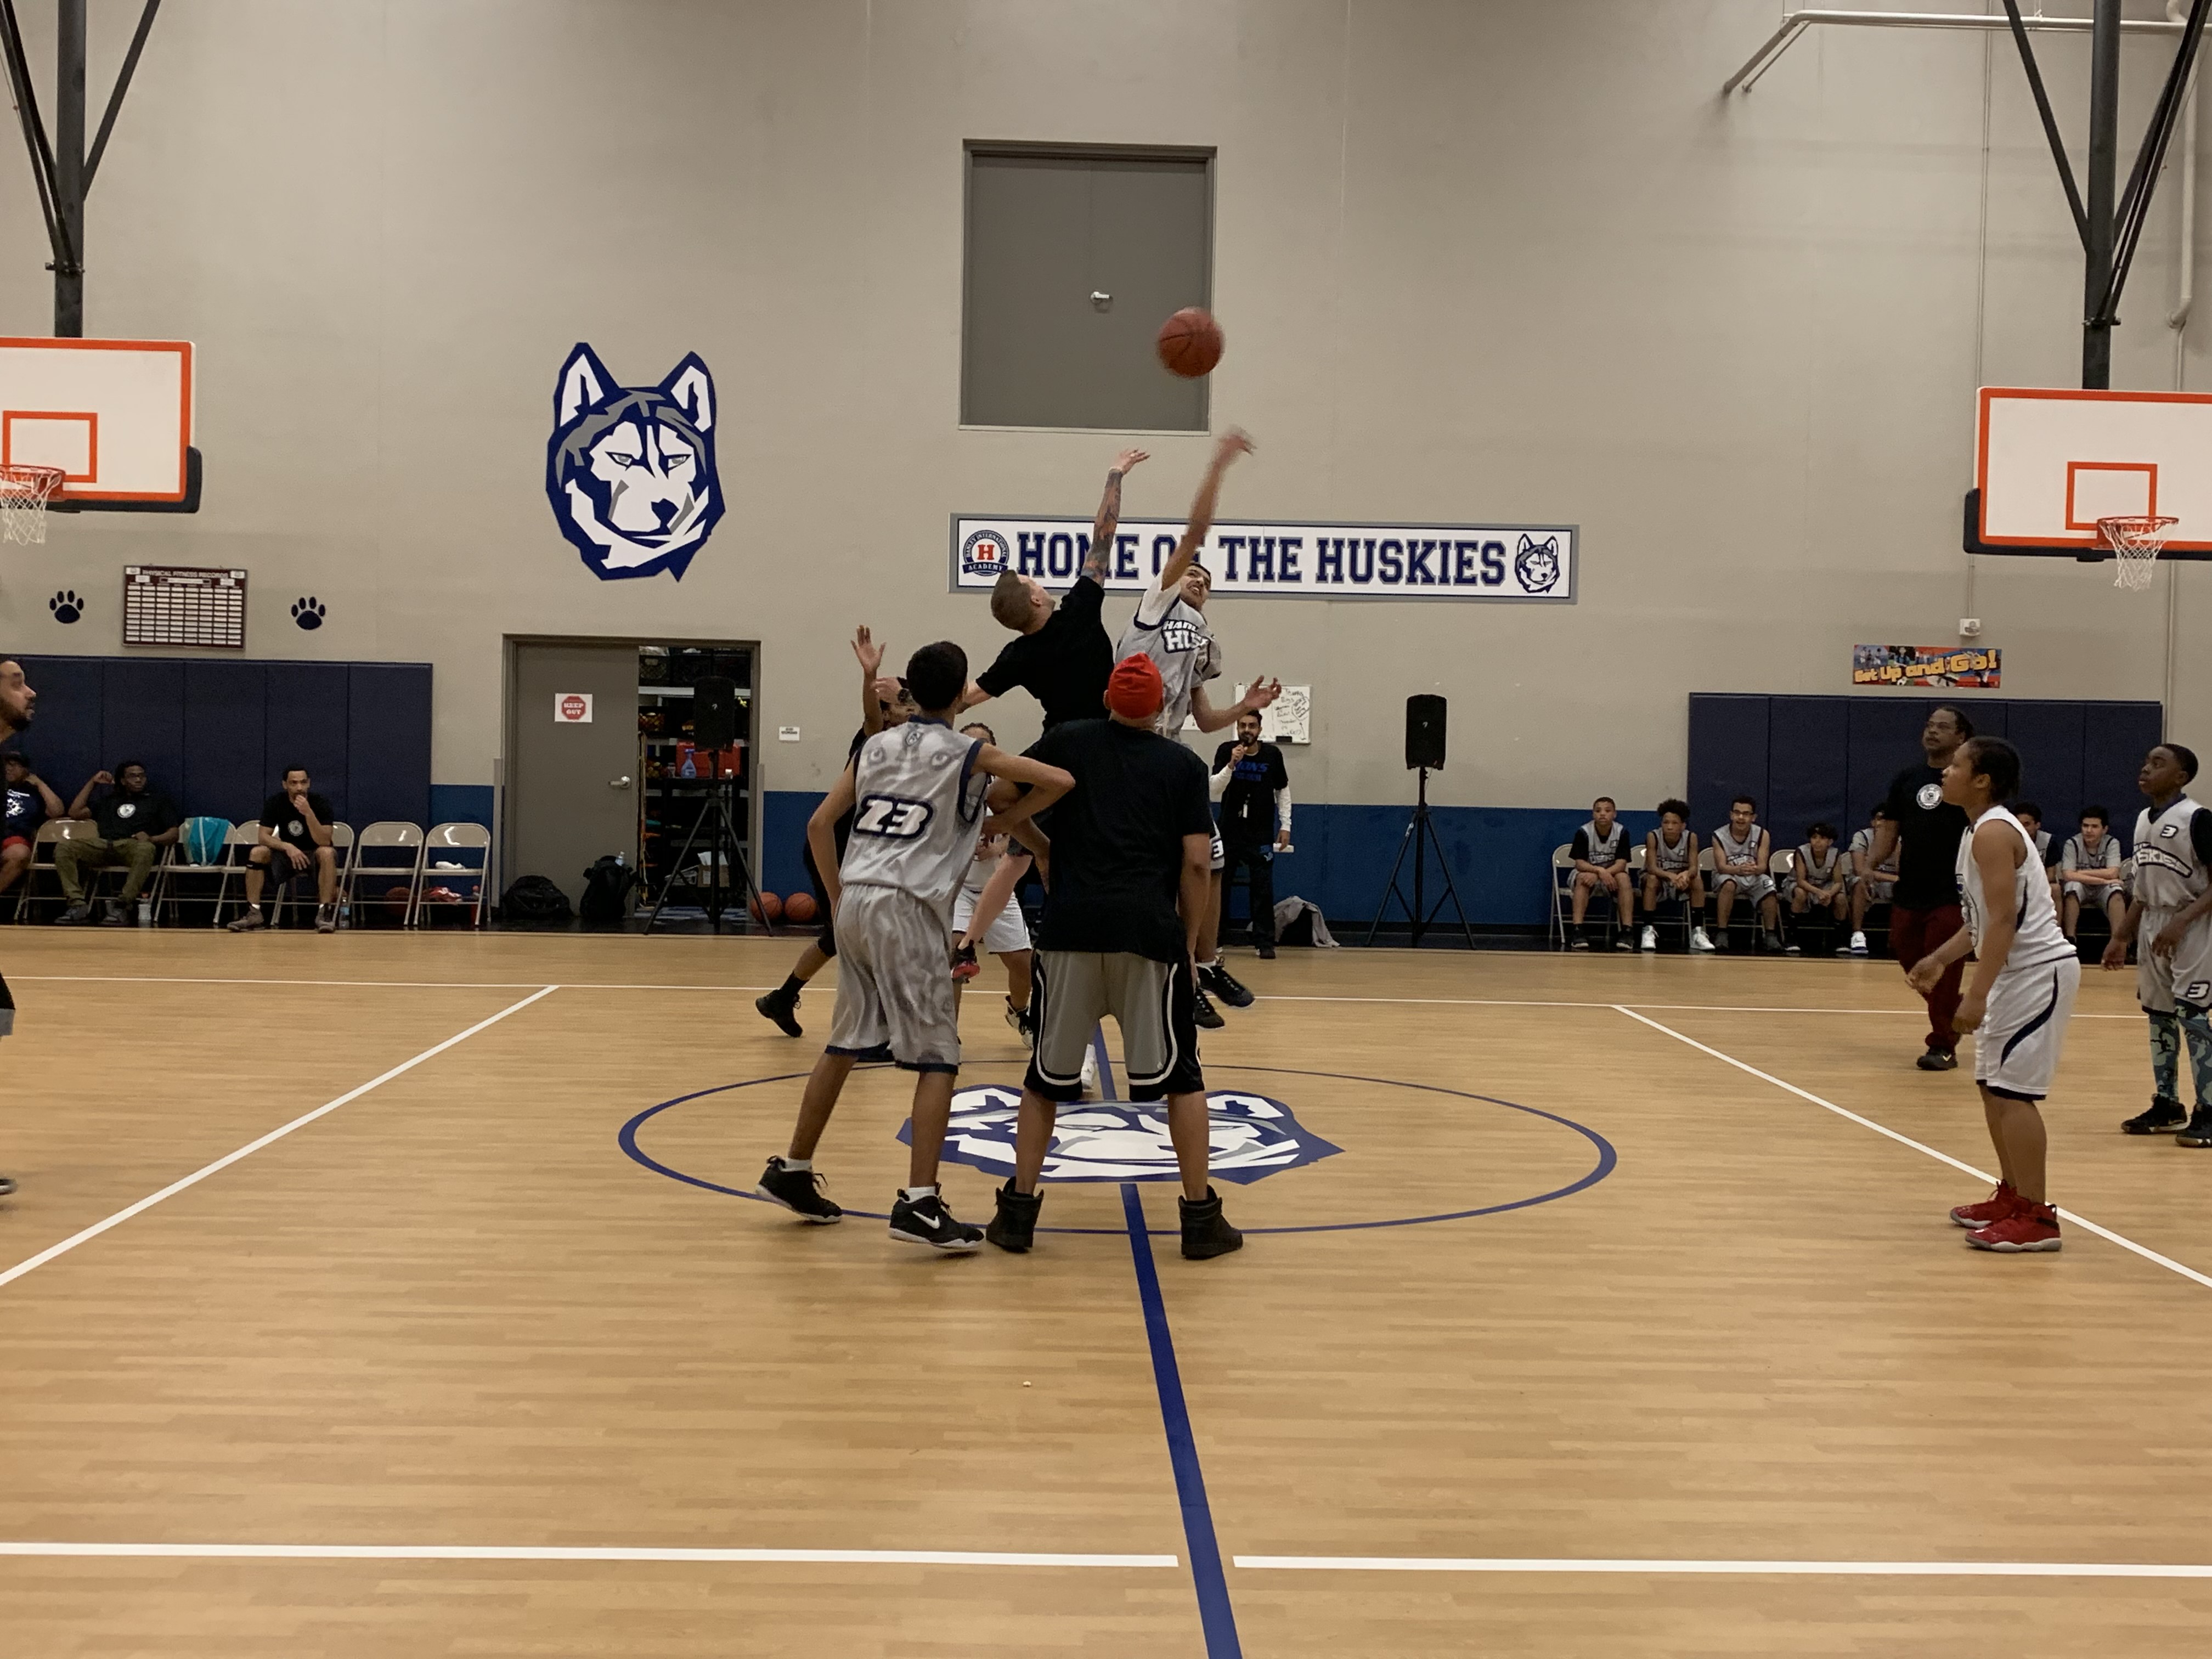 Hanley Academy Student vs Staff Basketball